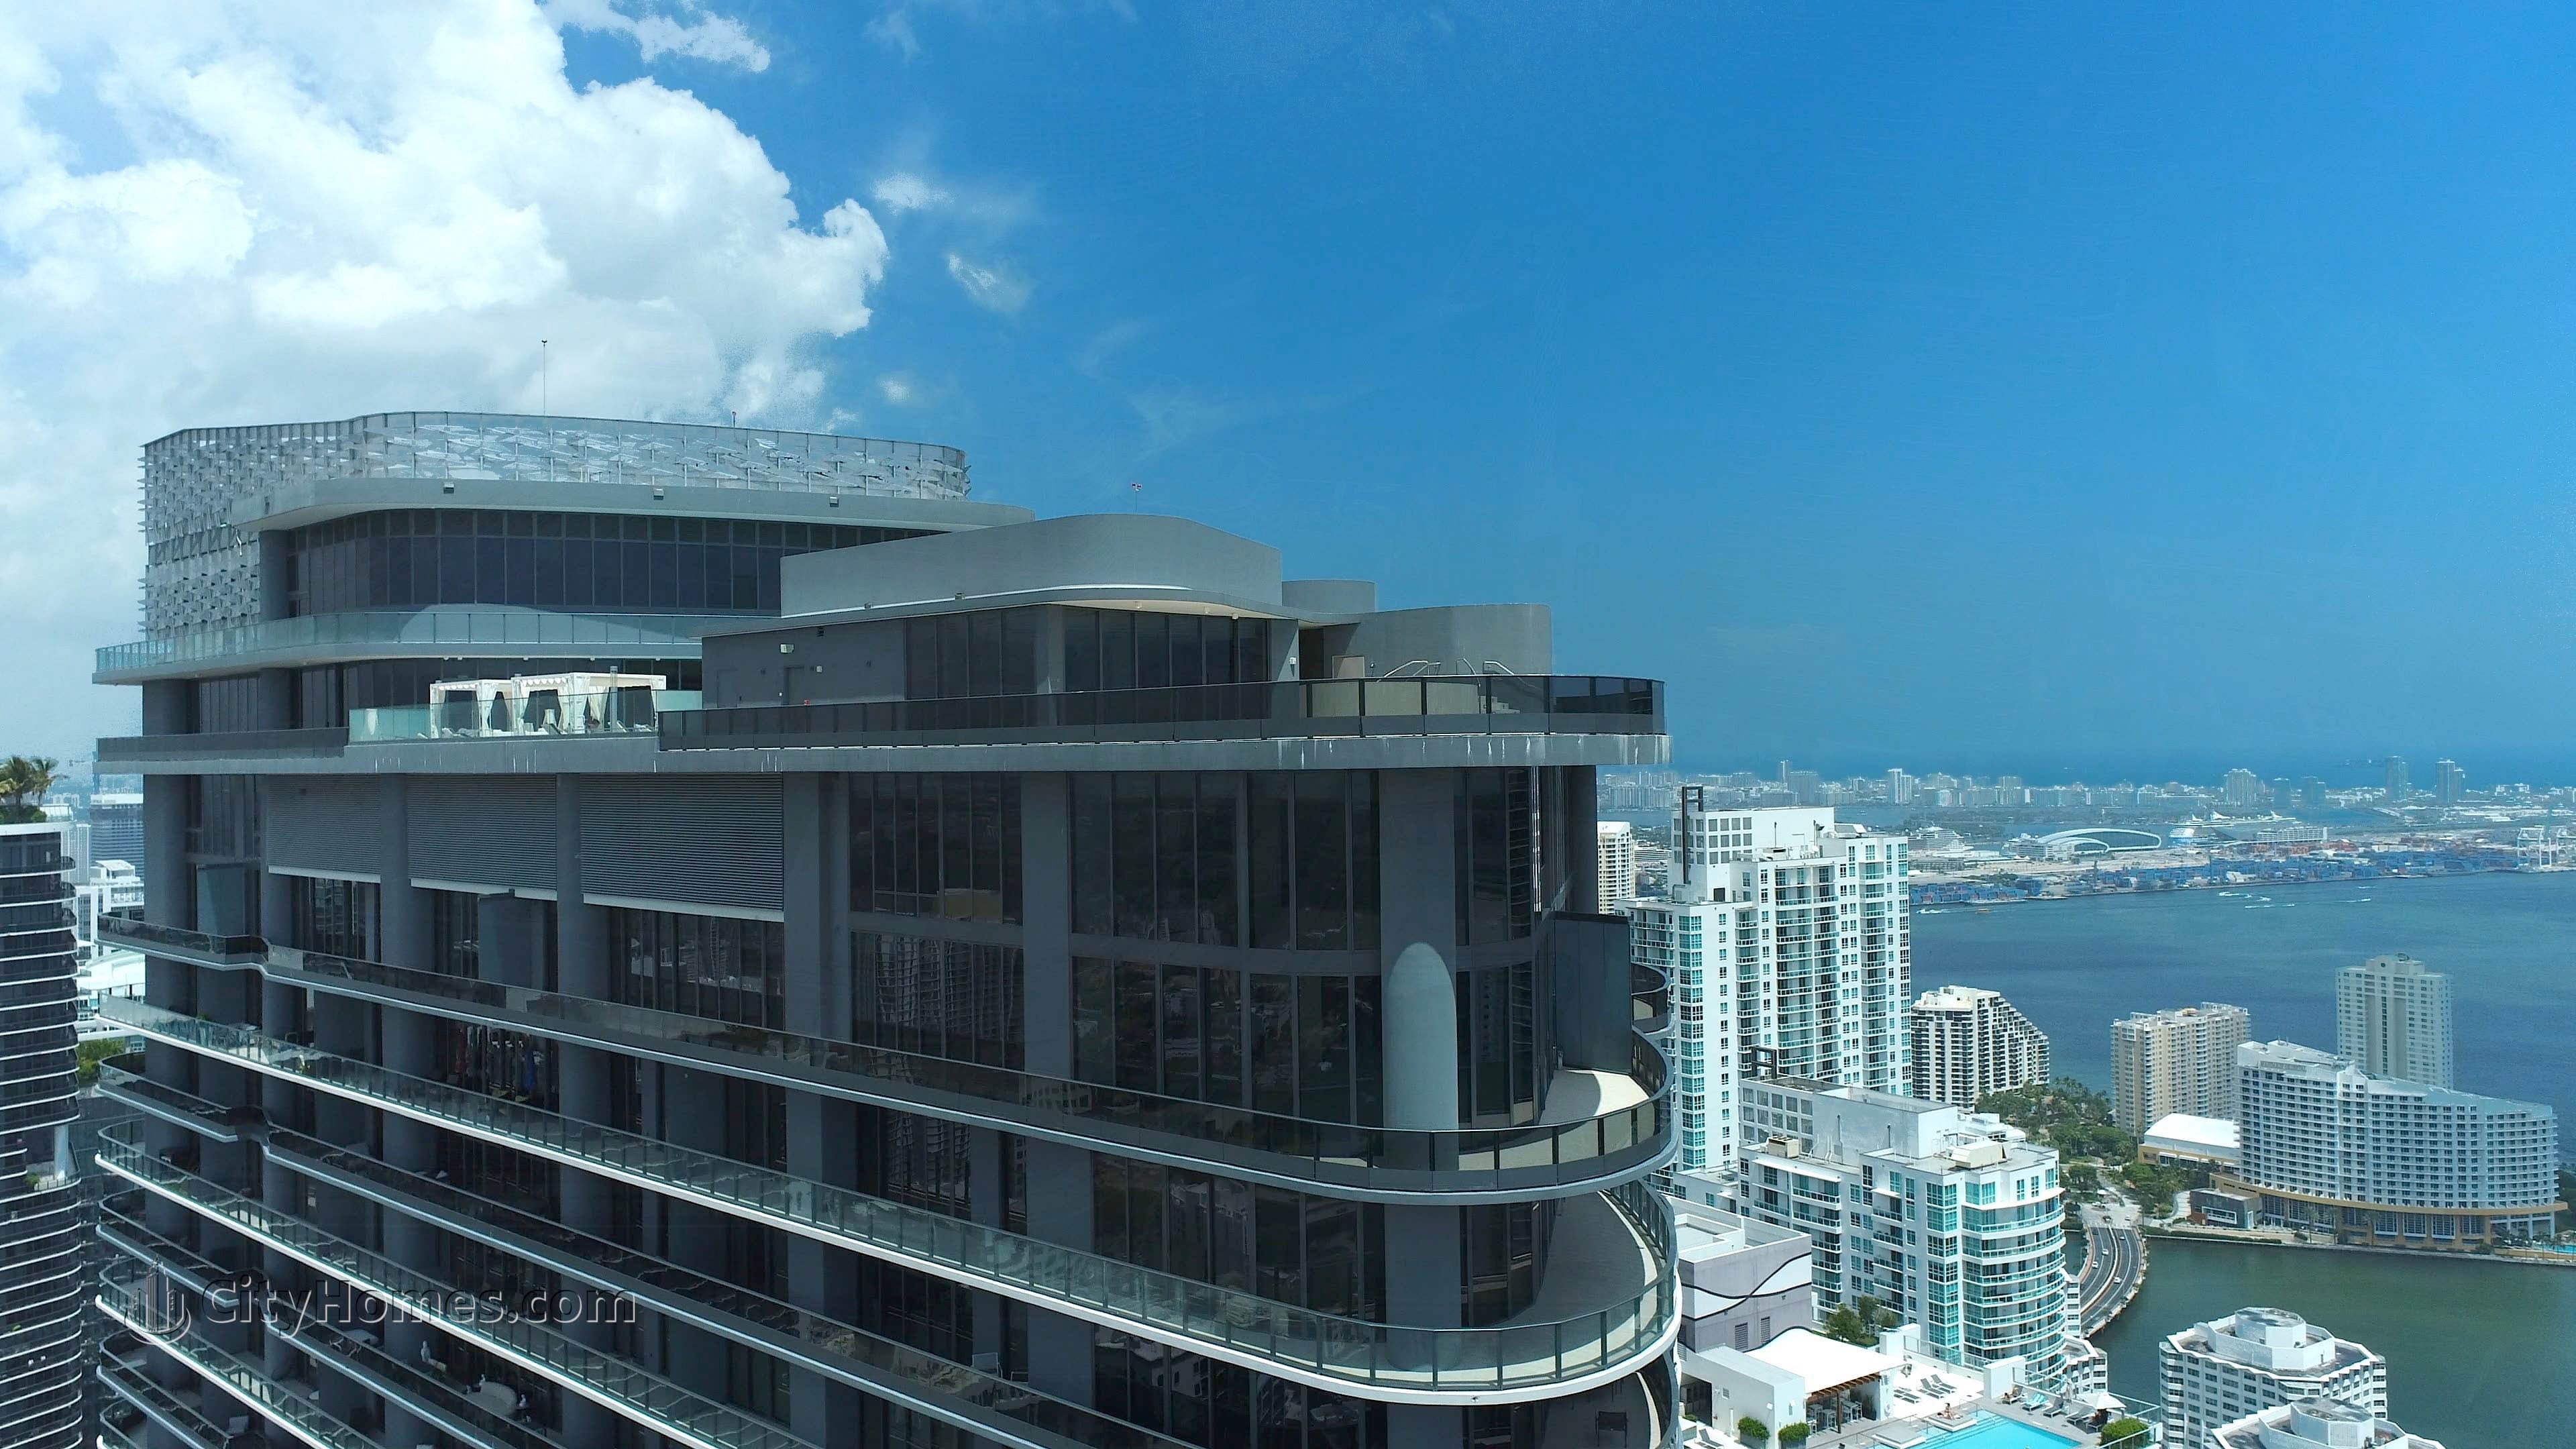 3. Brickell Flatiron building at 1000 Brickell Plaza, Brickell, Miami, FL 33130